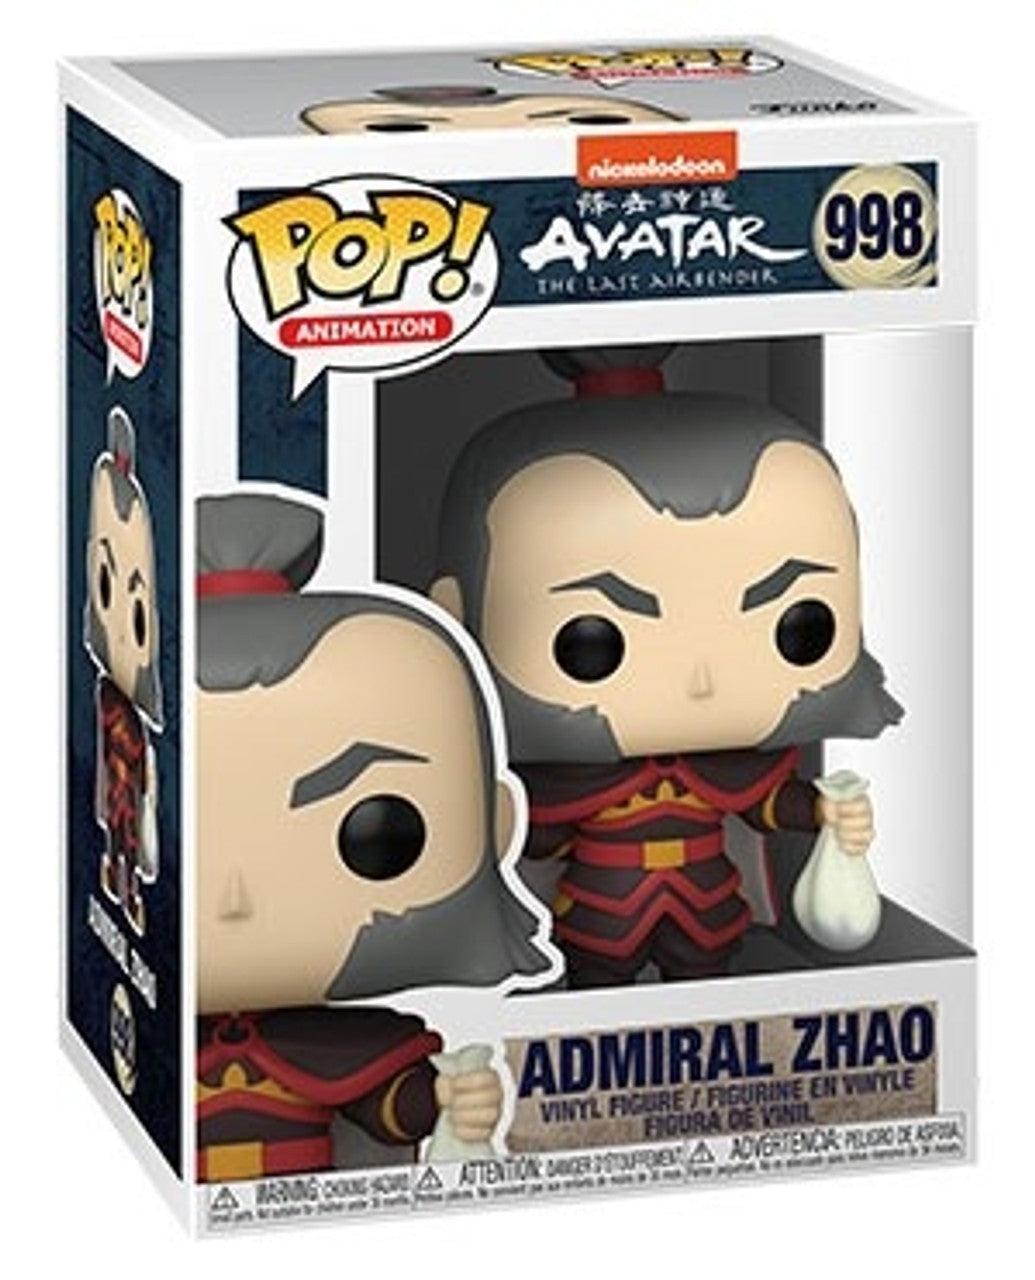 Avatar The Last Airbender: Funko Pop! Animation - Admiral Zhao #998 - Magic Dreams Store